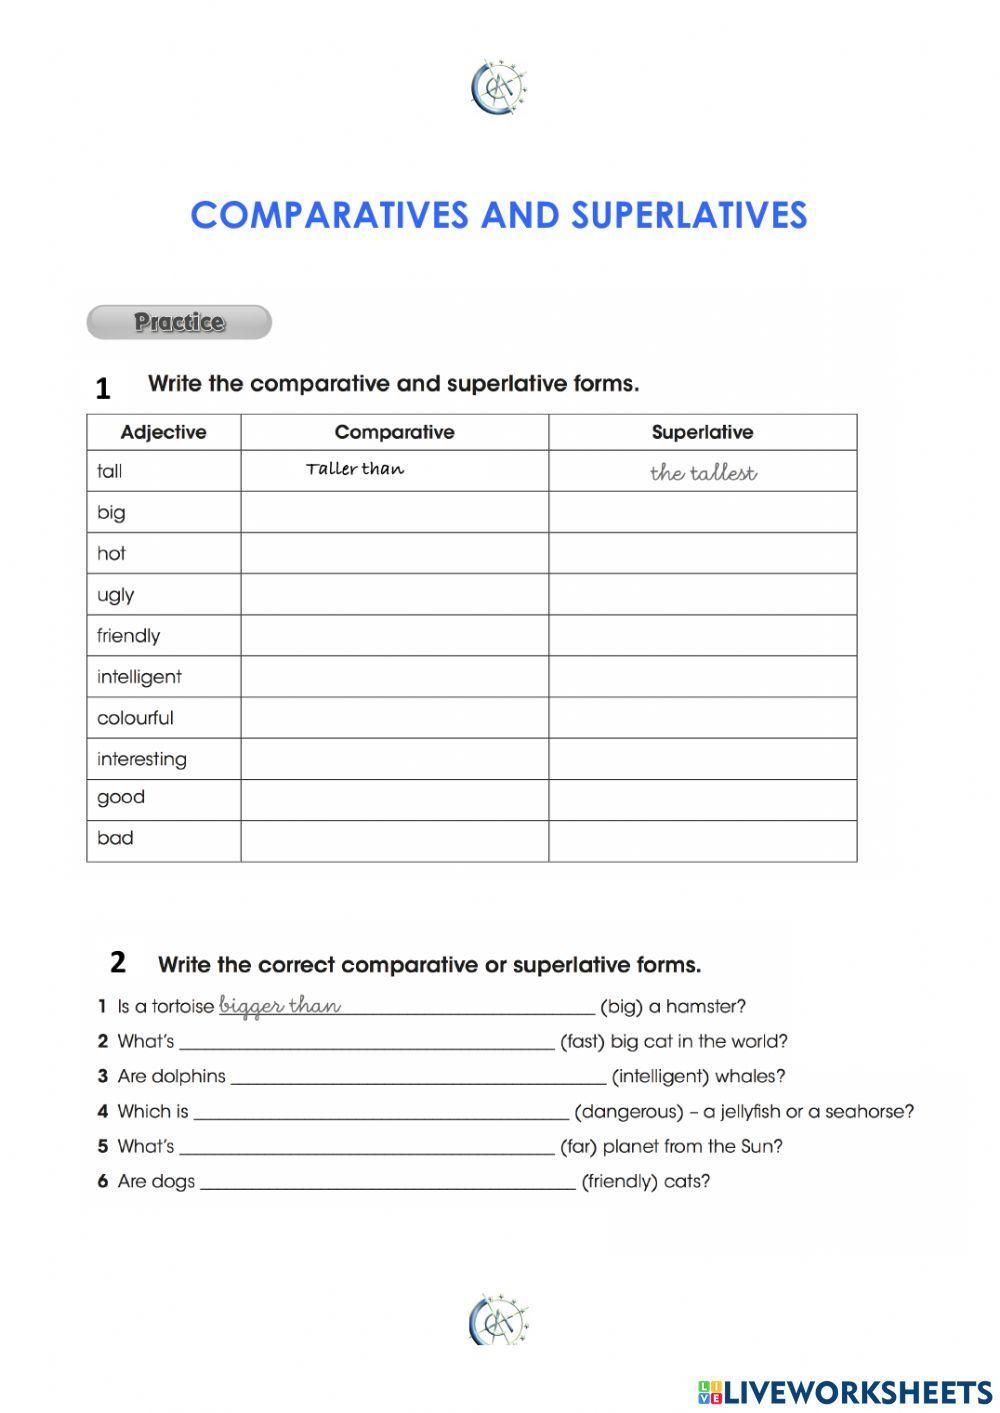 Compartive and superlative adjectives